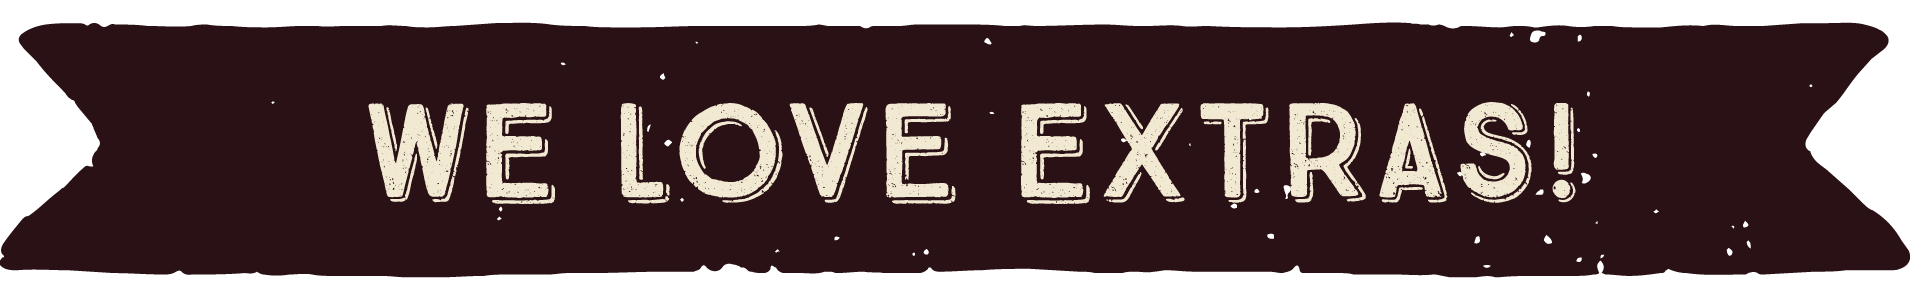 extras-banner-v1